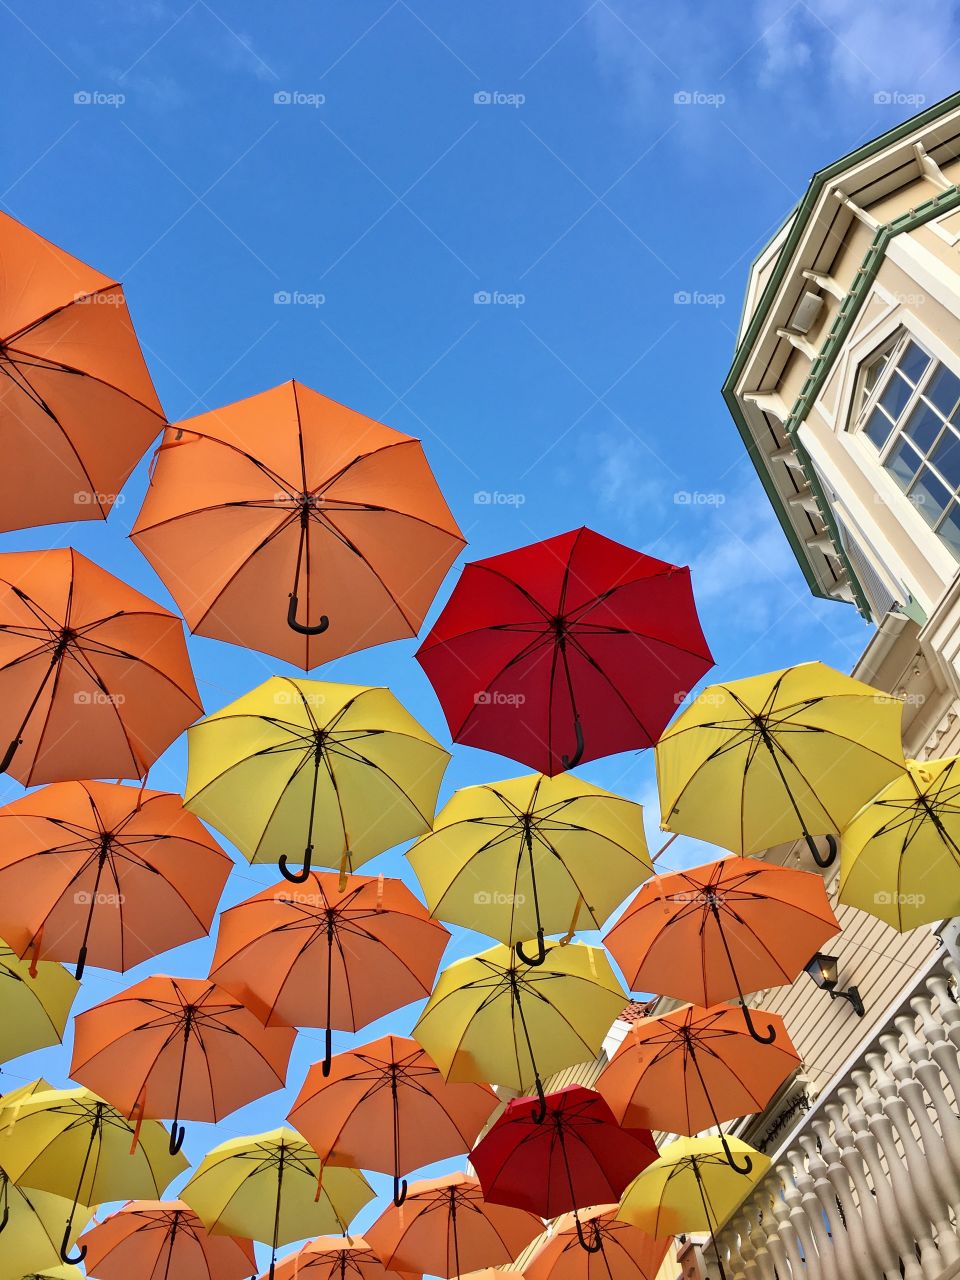 Umbrella, Sunshade, Sky, Art, Design